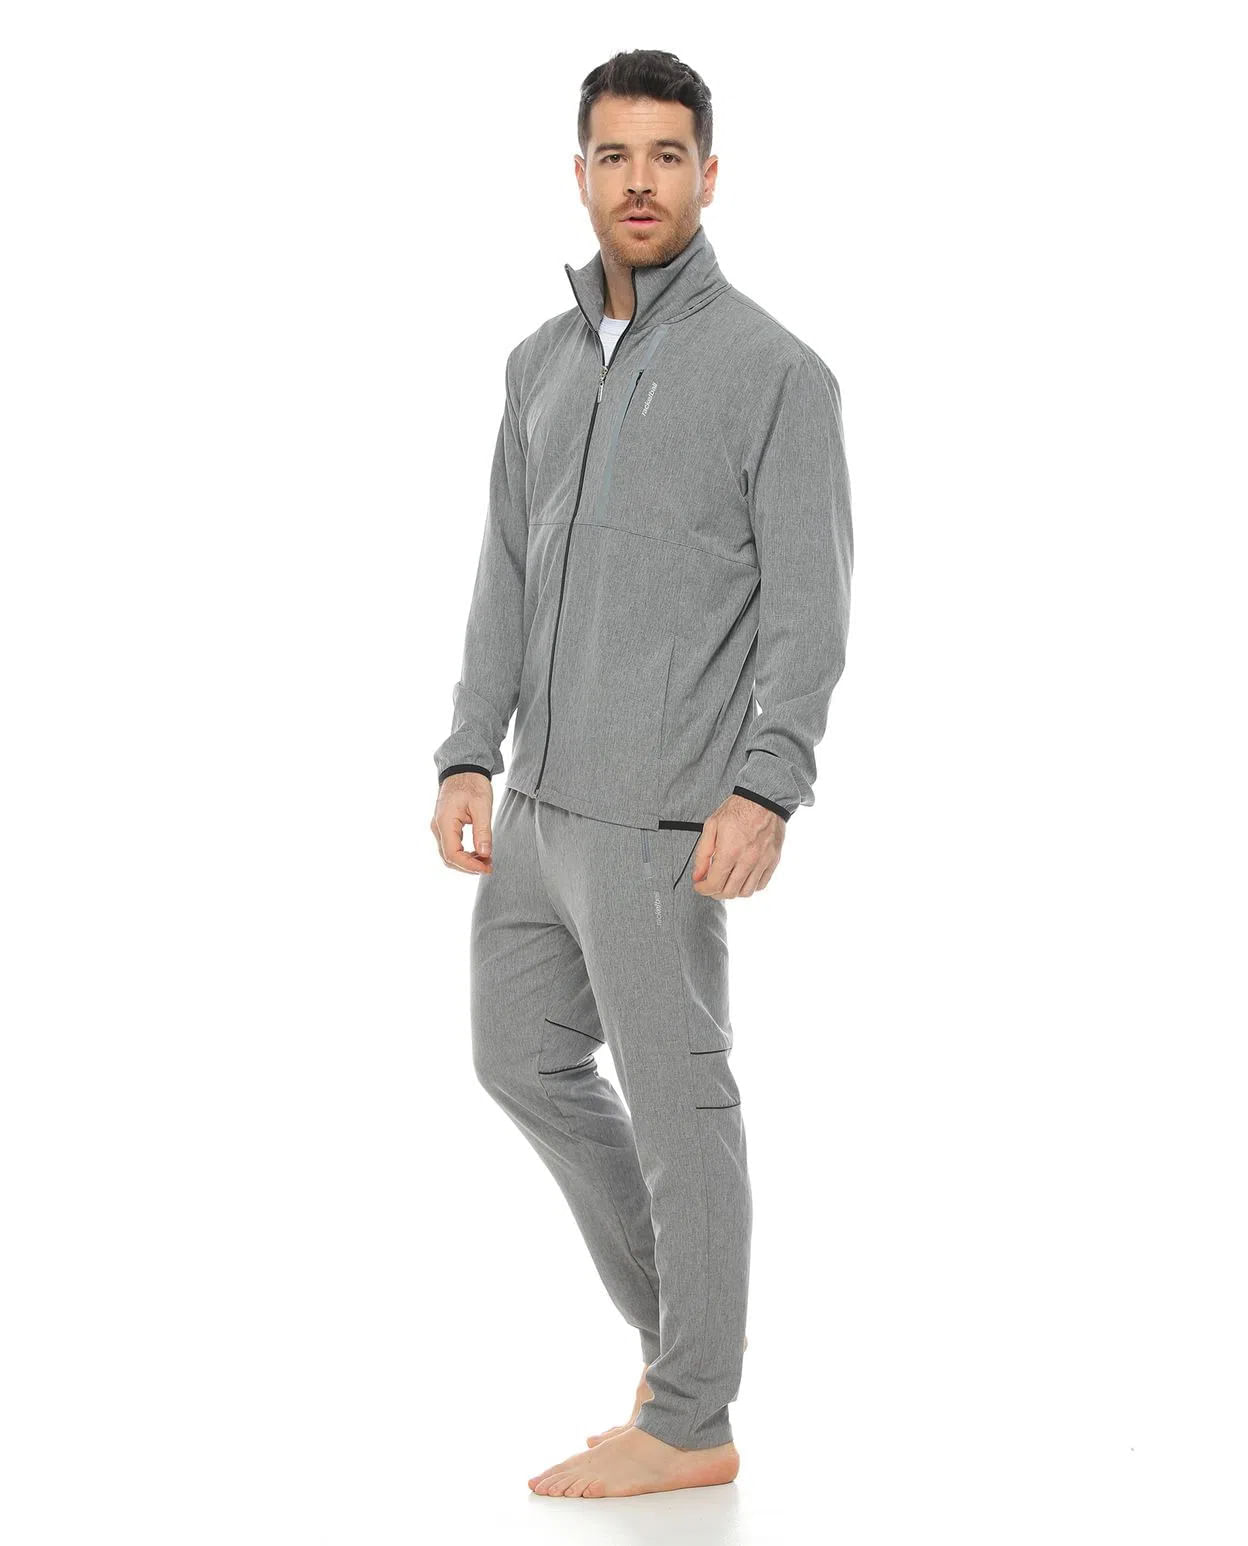 modelo-con-Pantalon-Deportivo-Jaspe-y-chaqueta-autoguardable-para-Hombre